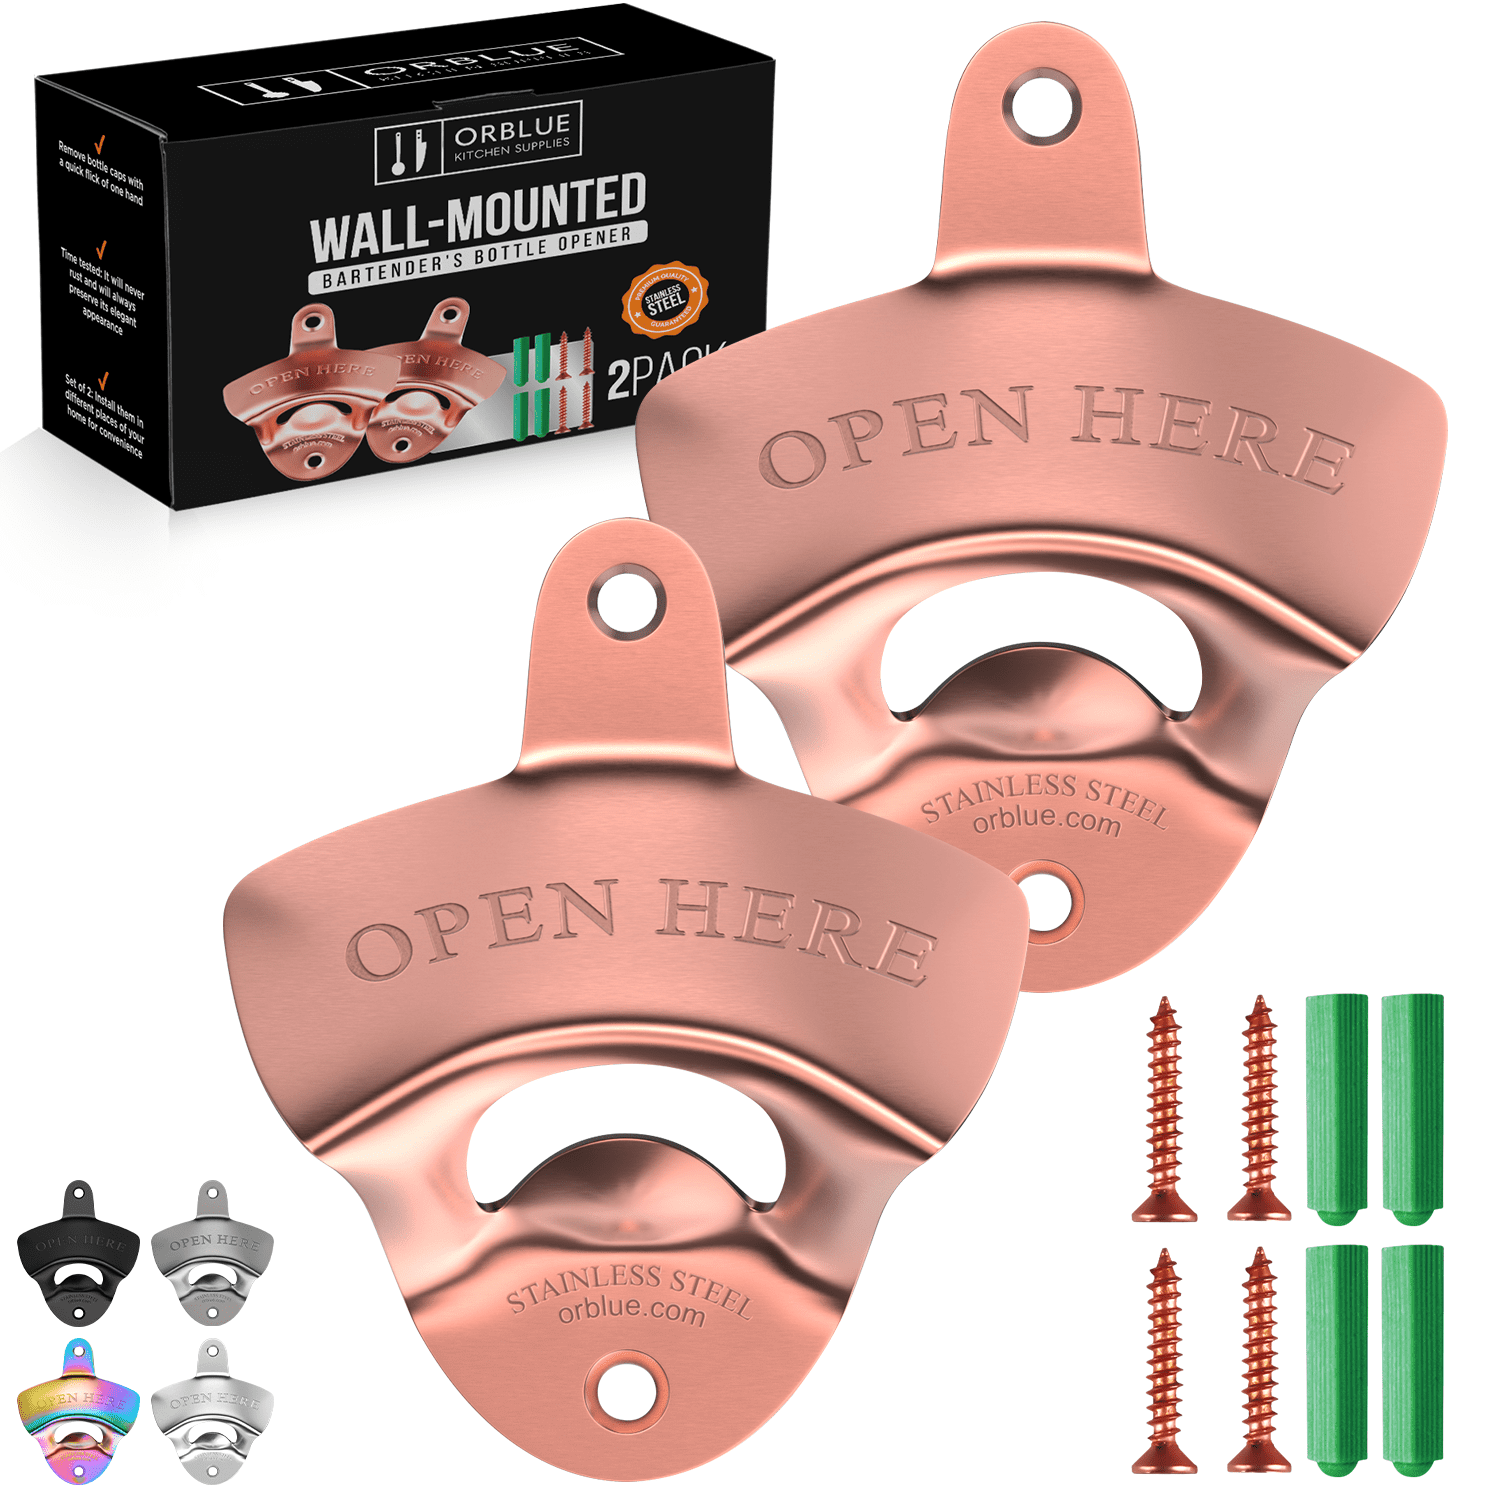 Bear Bottle Opener - Stainless Steel - Pink - White - ApolloBox